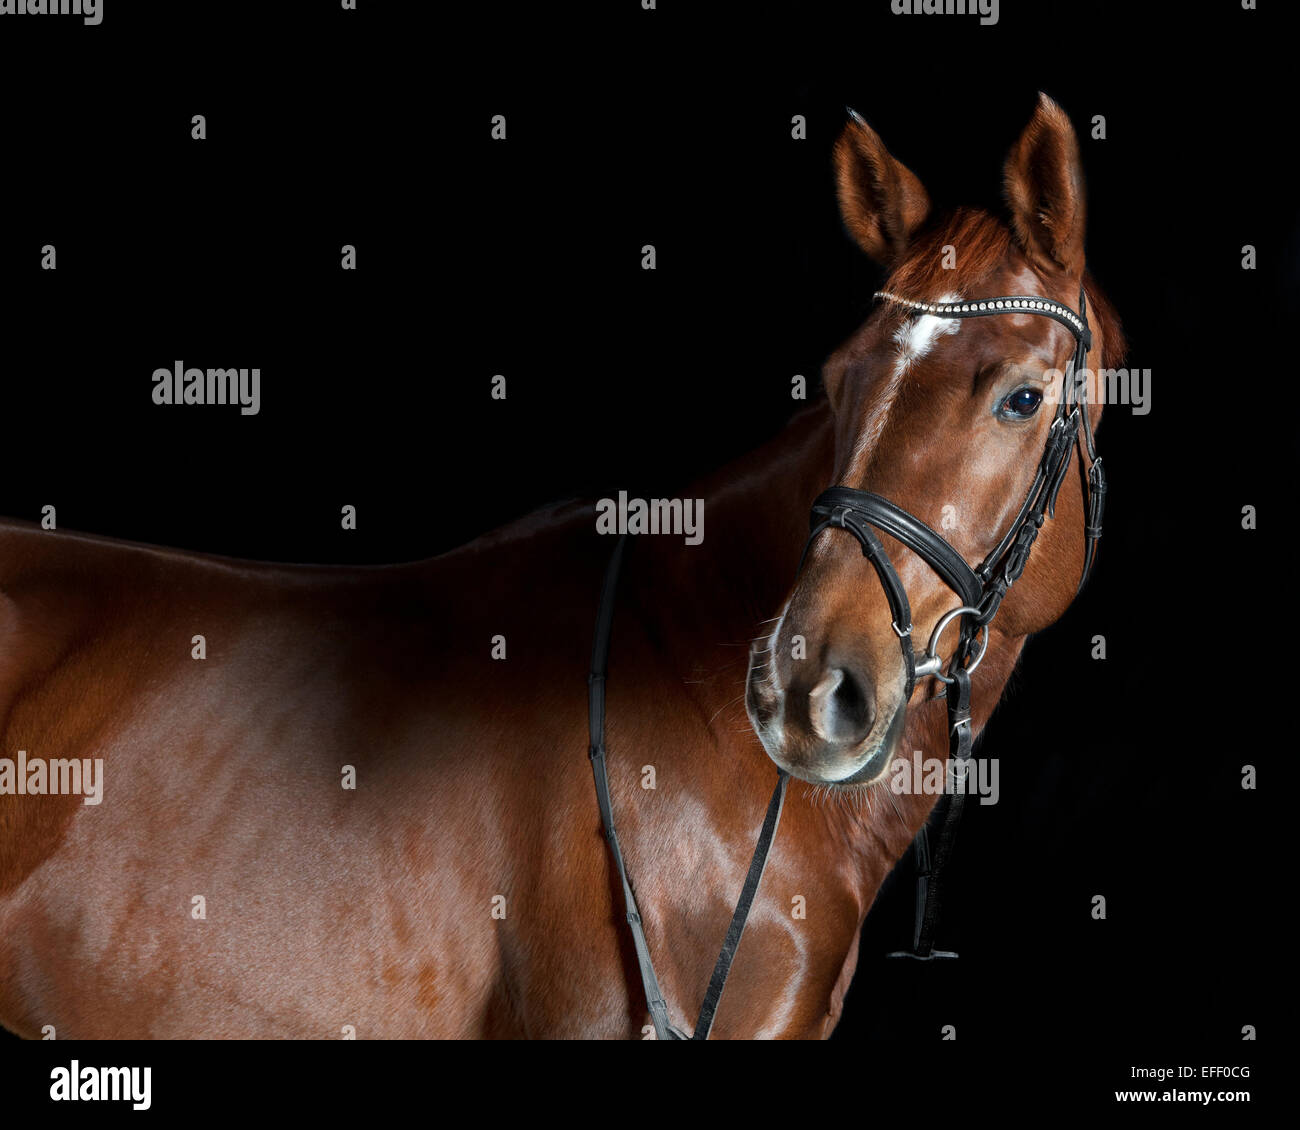 German riding horse in studio portrait, black background Stock Photo